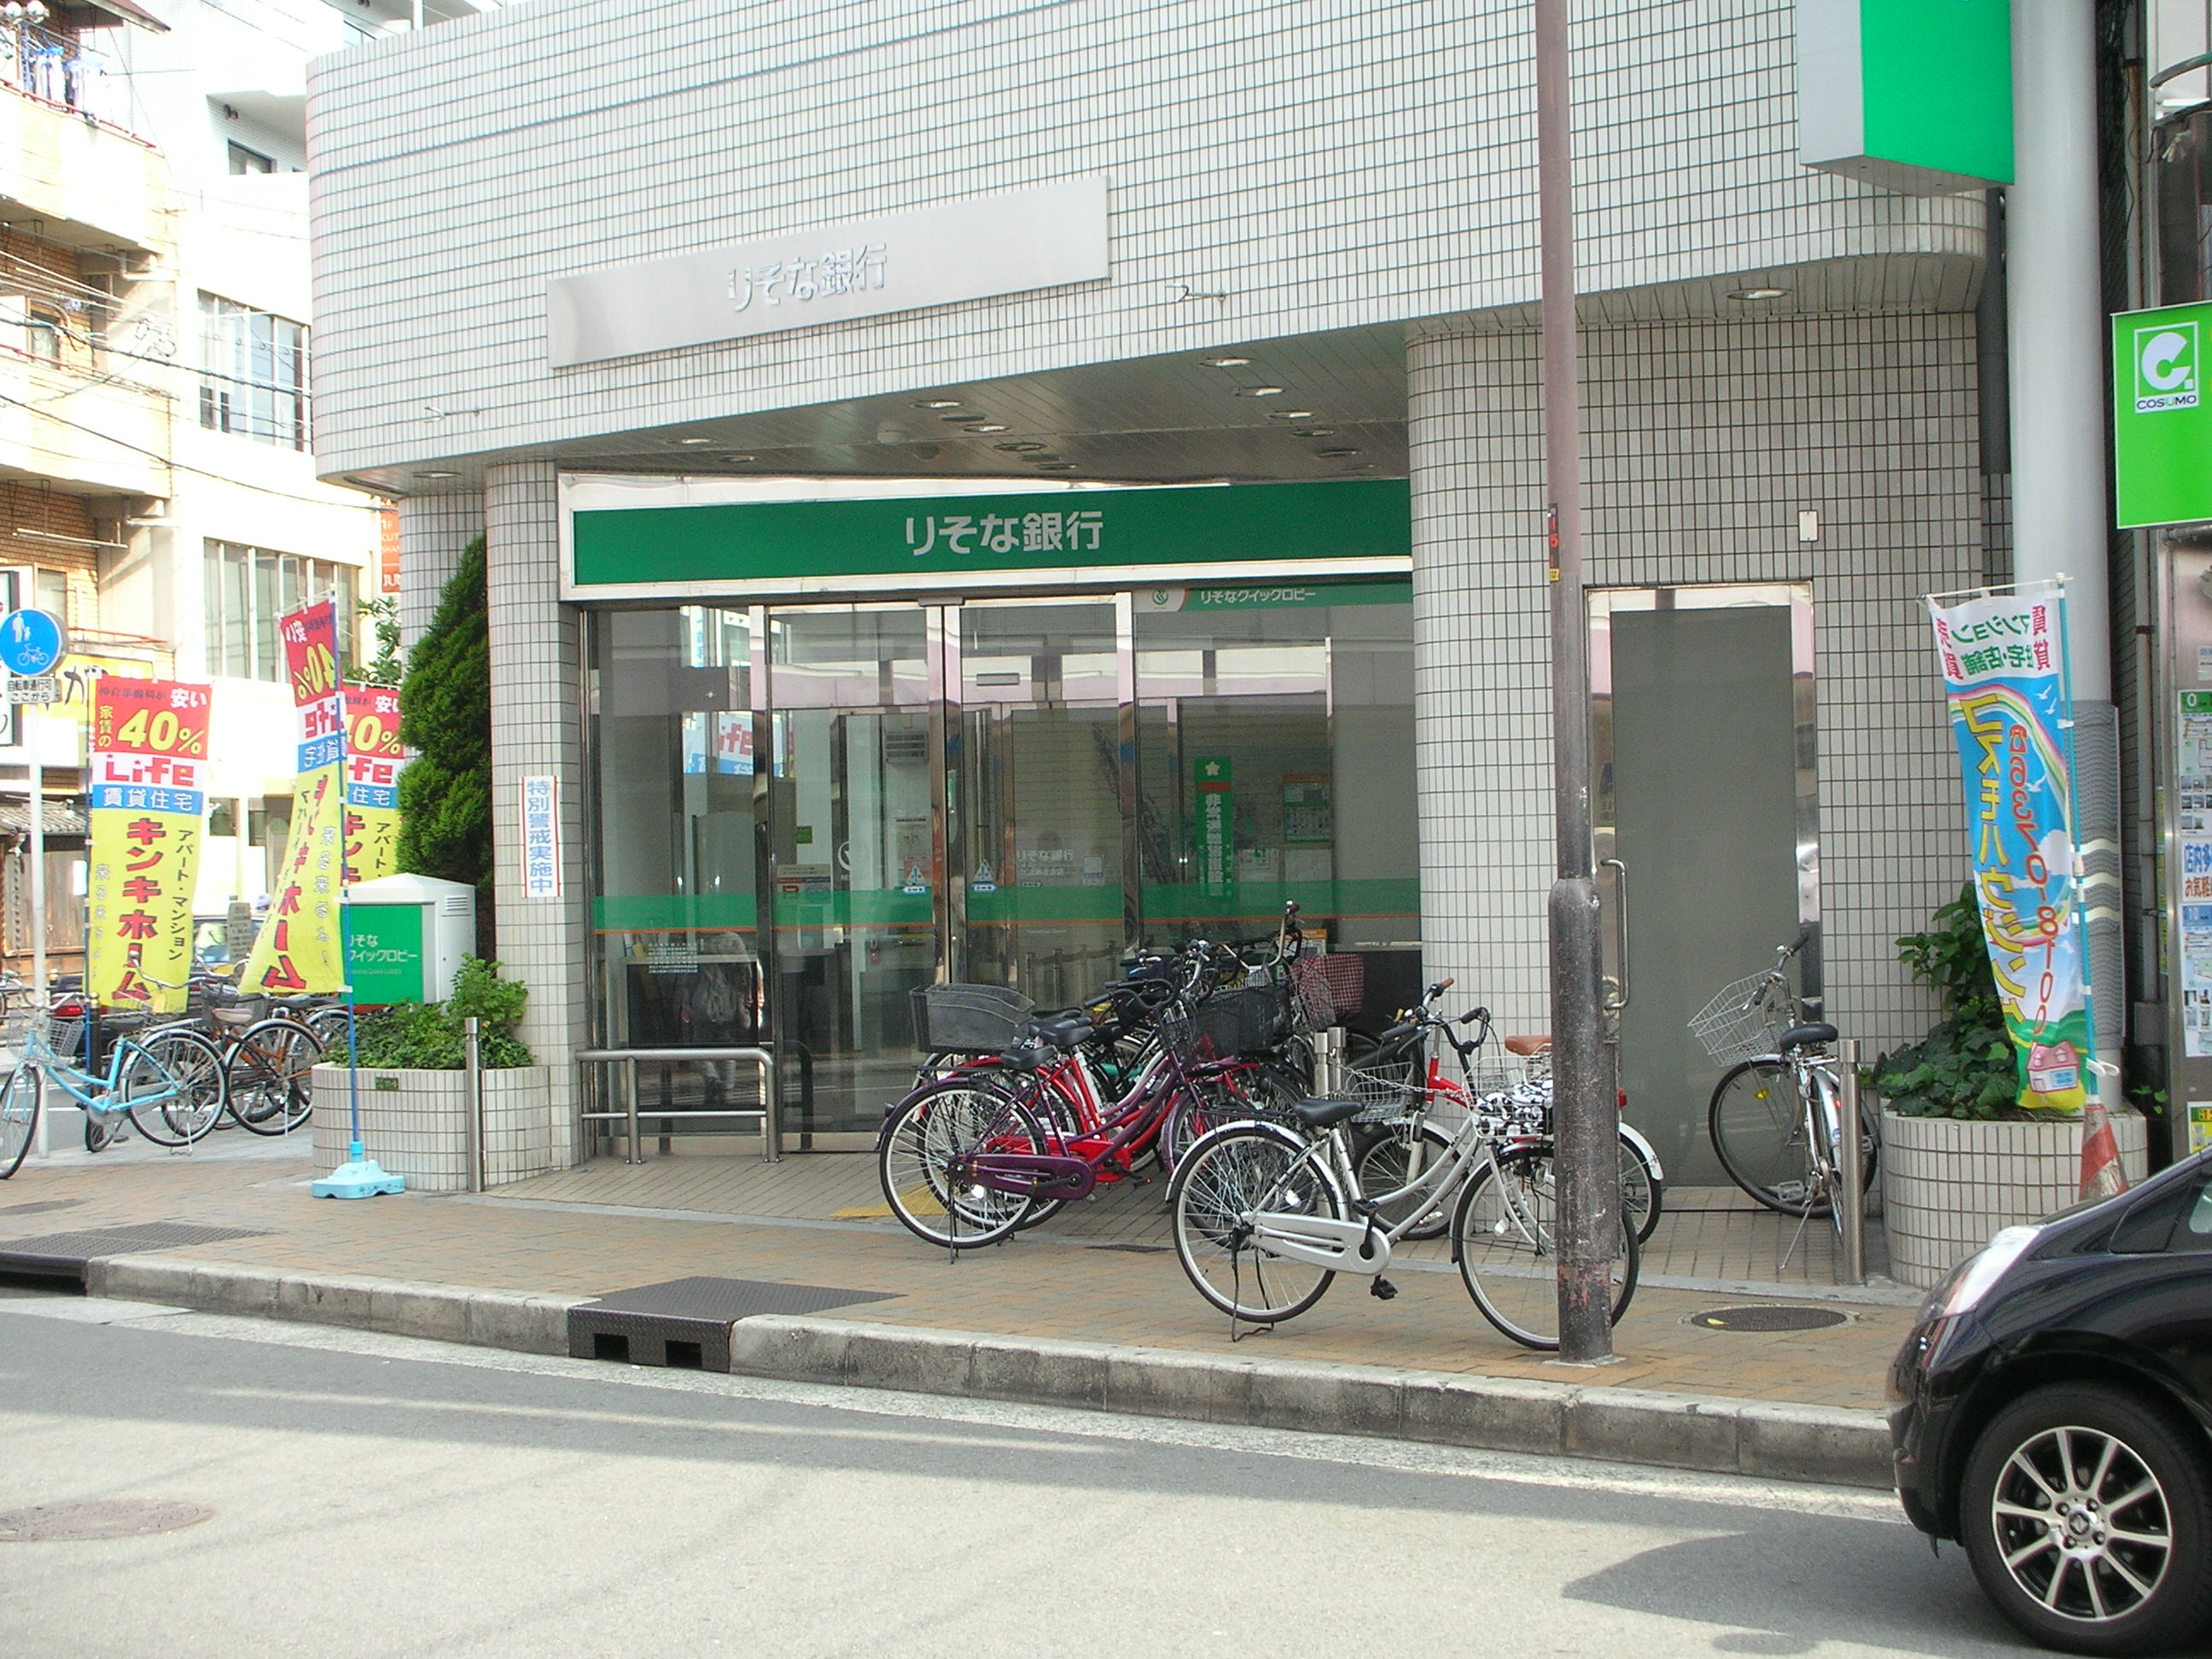 Bank. 190m to Resona Bank Suita branch Kami Shinjo Branch (Bank)